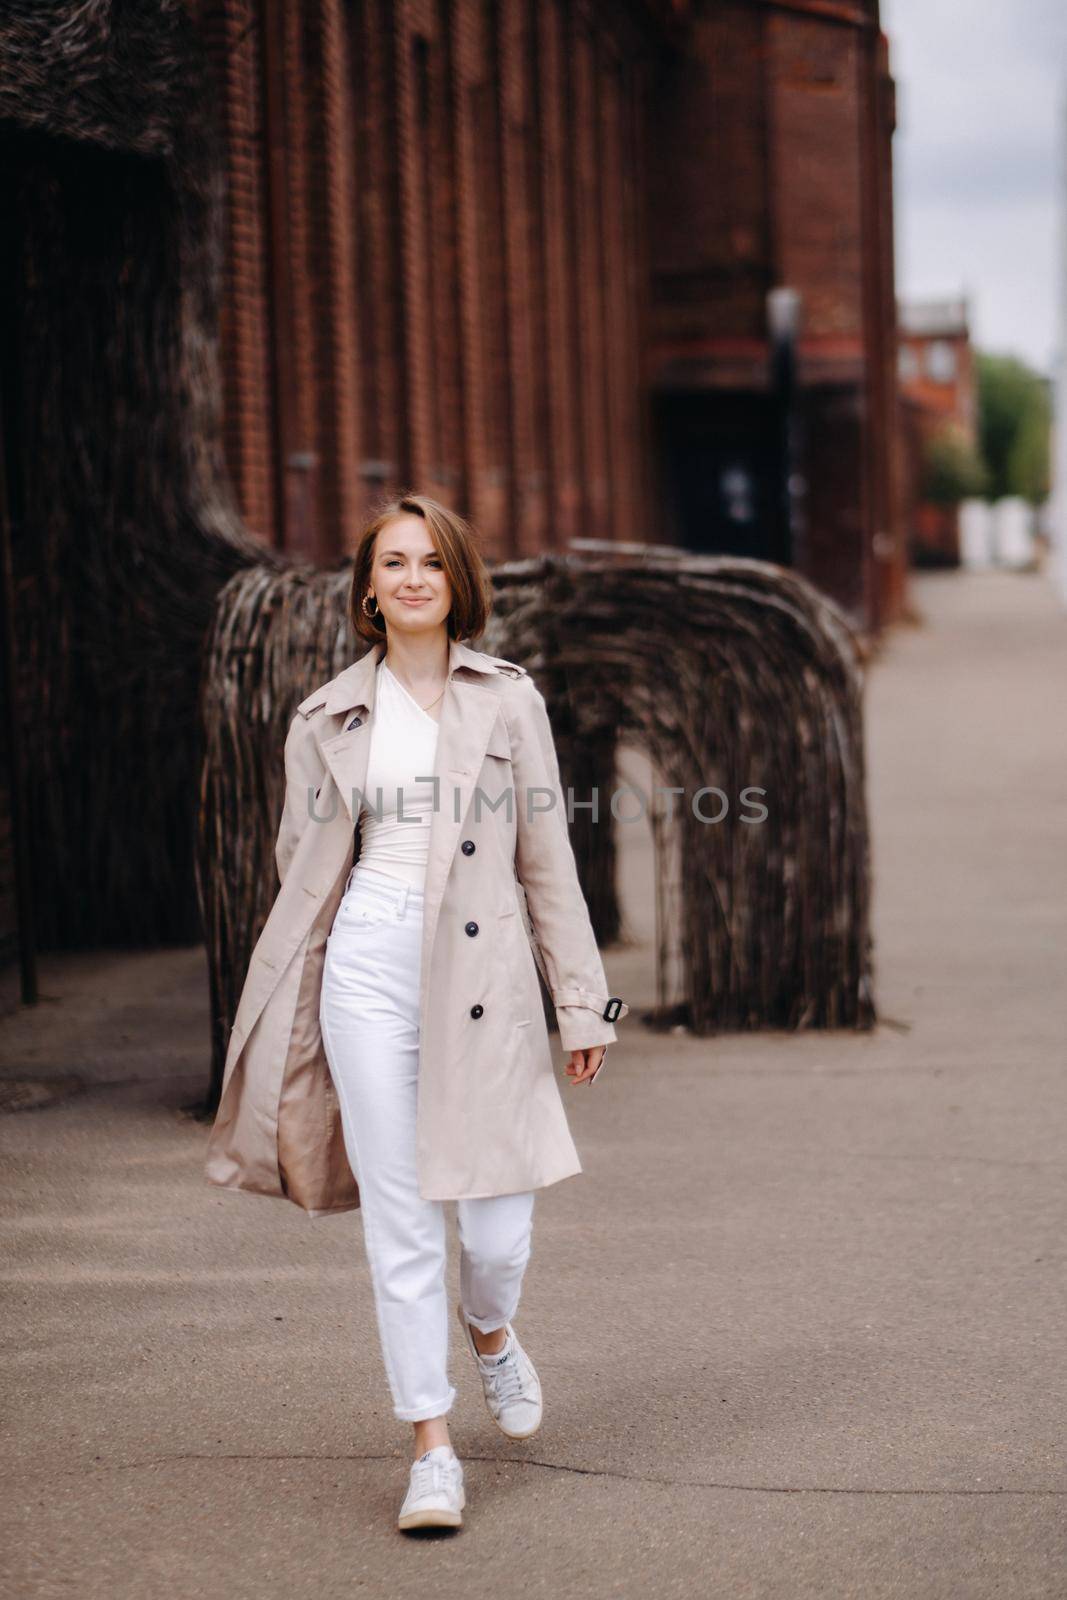 A happy stylish girl in a gray coat walks around the city.